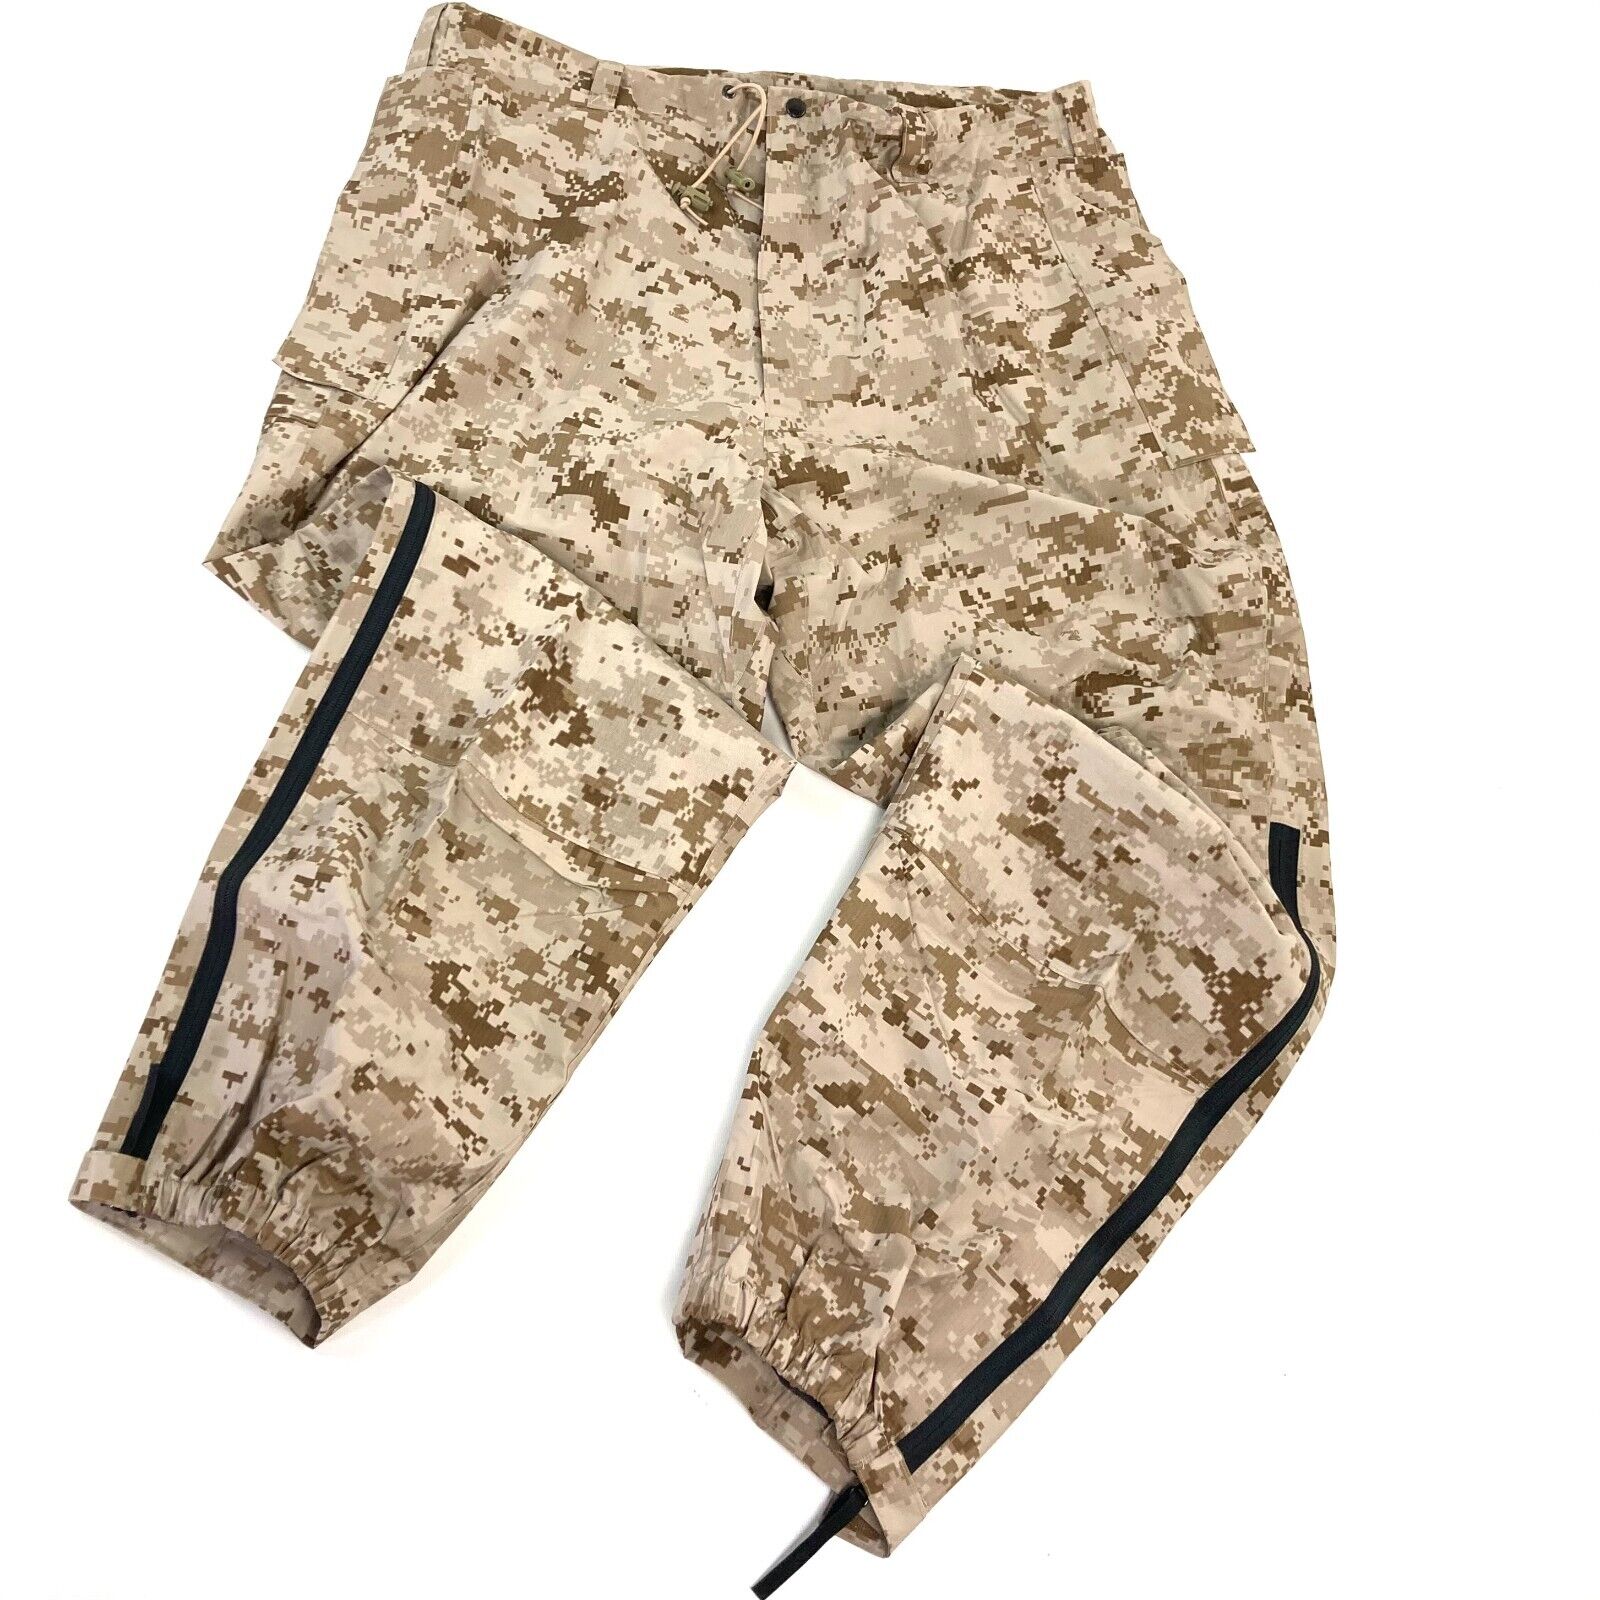 USMC Lightweight Exposure Pants Desert MARPAT Gore-Tex Trousers MEDIUM REGULAR